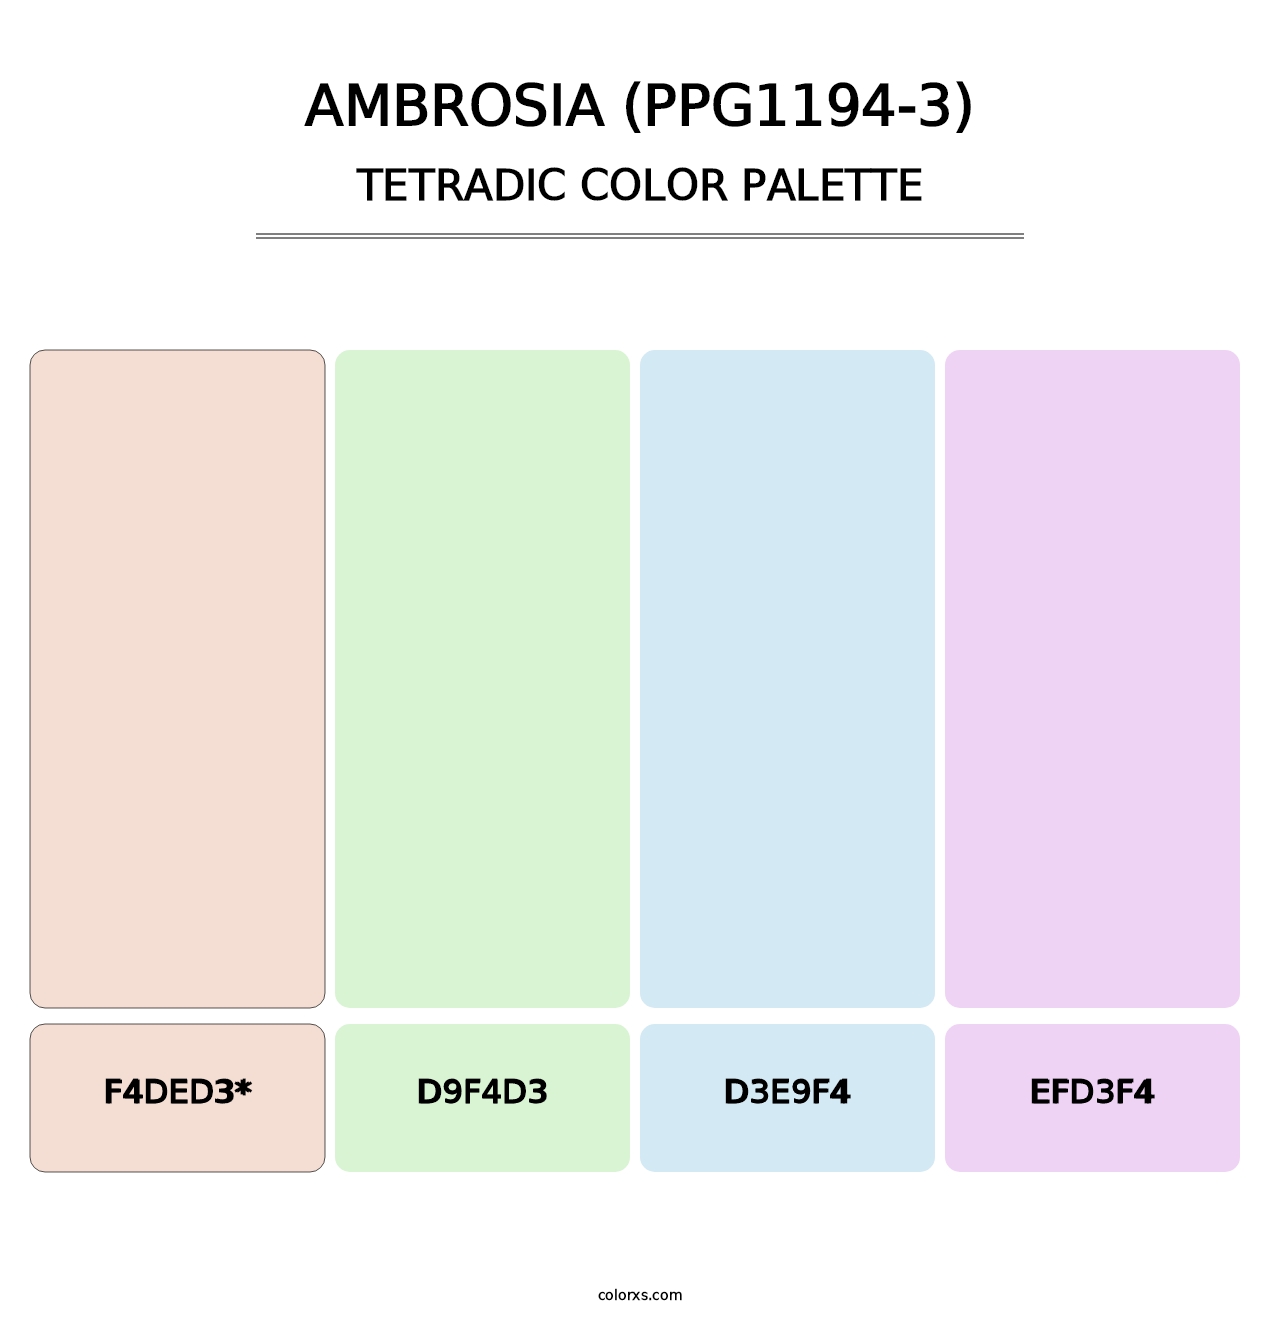 Ambrosia (PPG1194-3) - Tetradic Color Palette